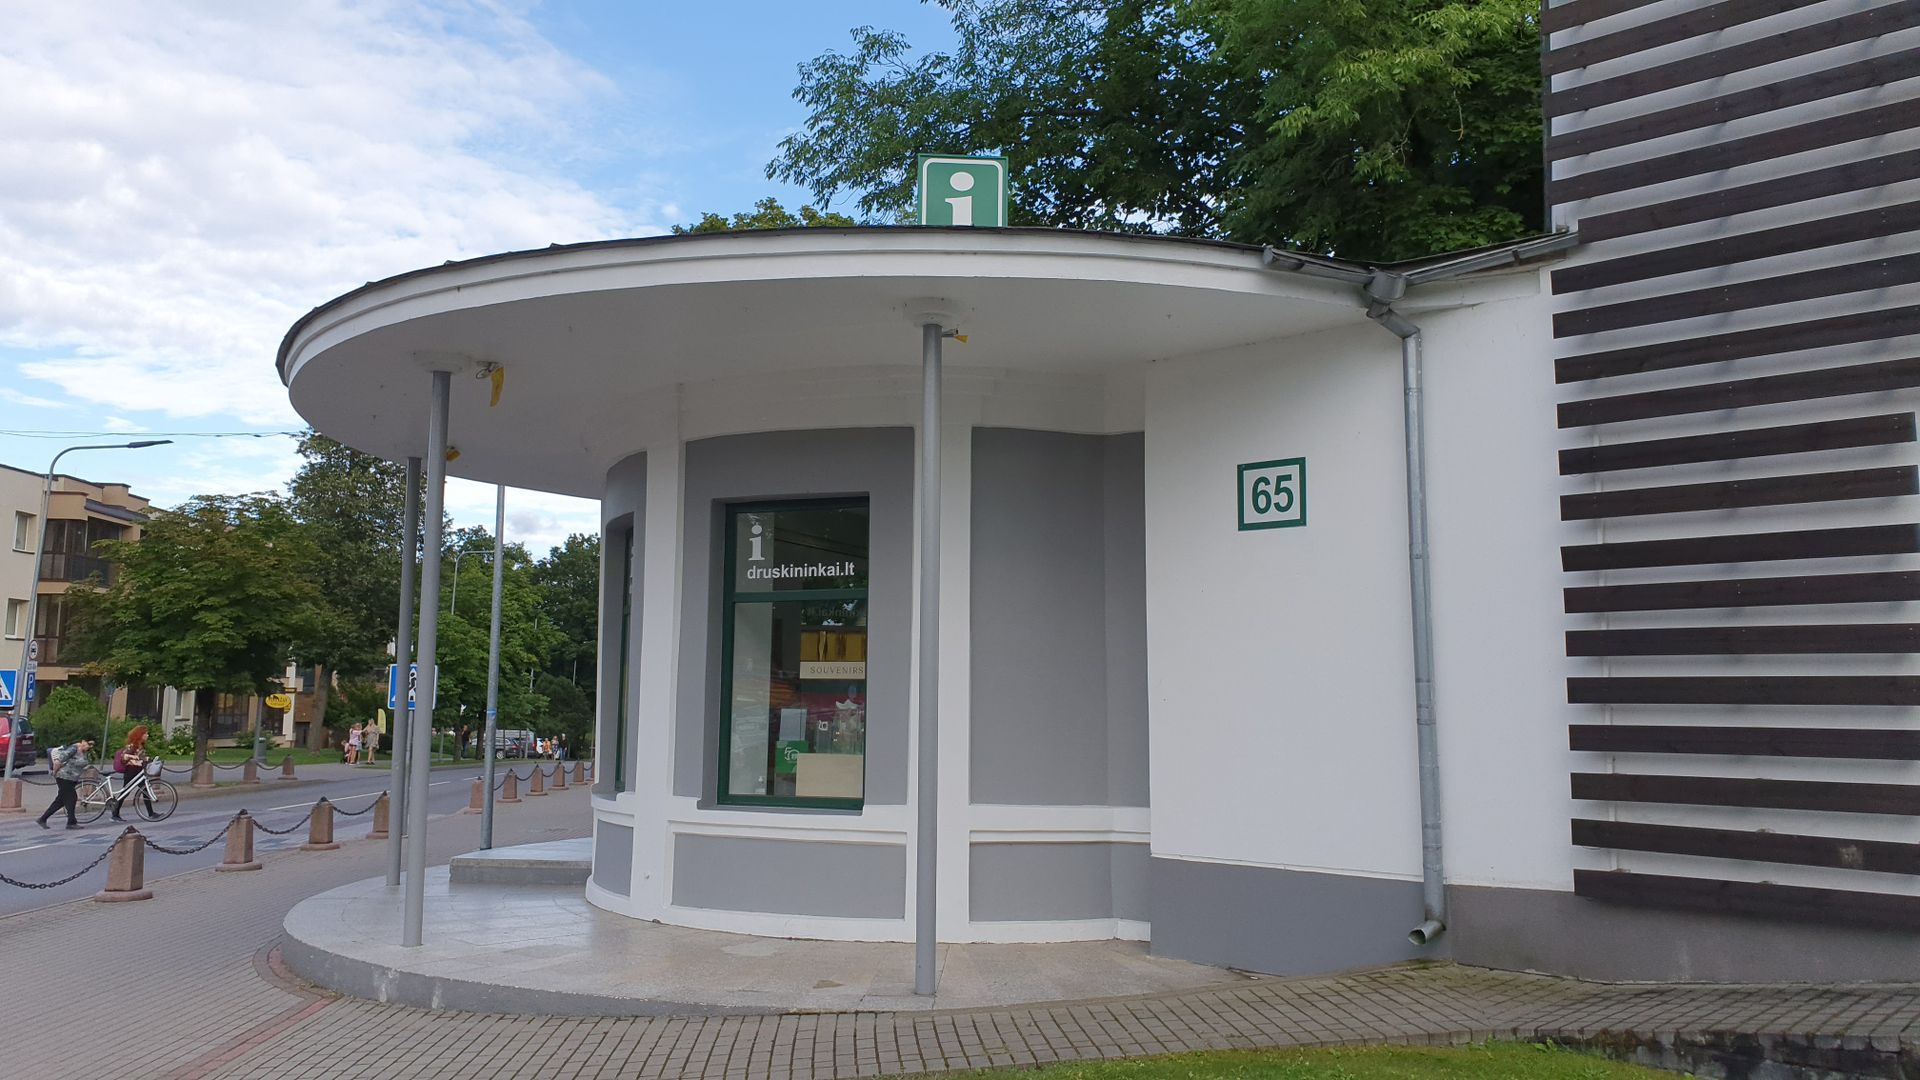 Druskininkai Tourism and Business Information Center